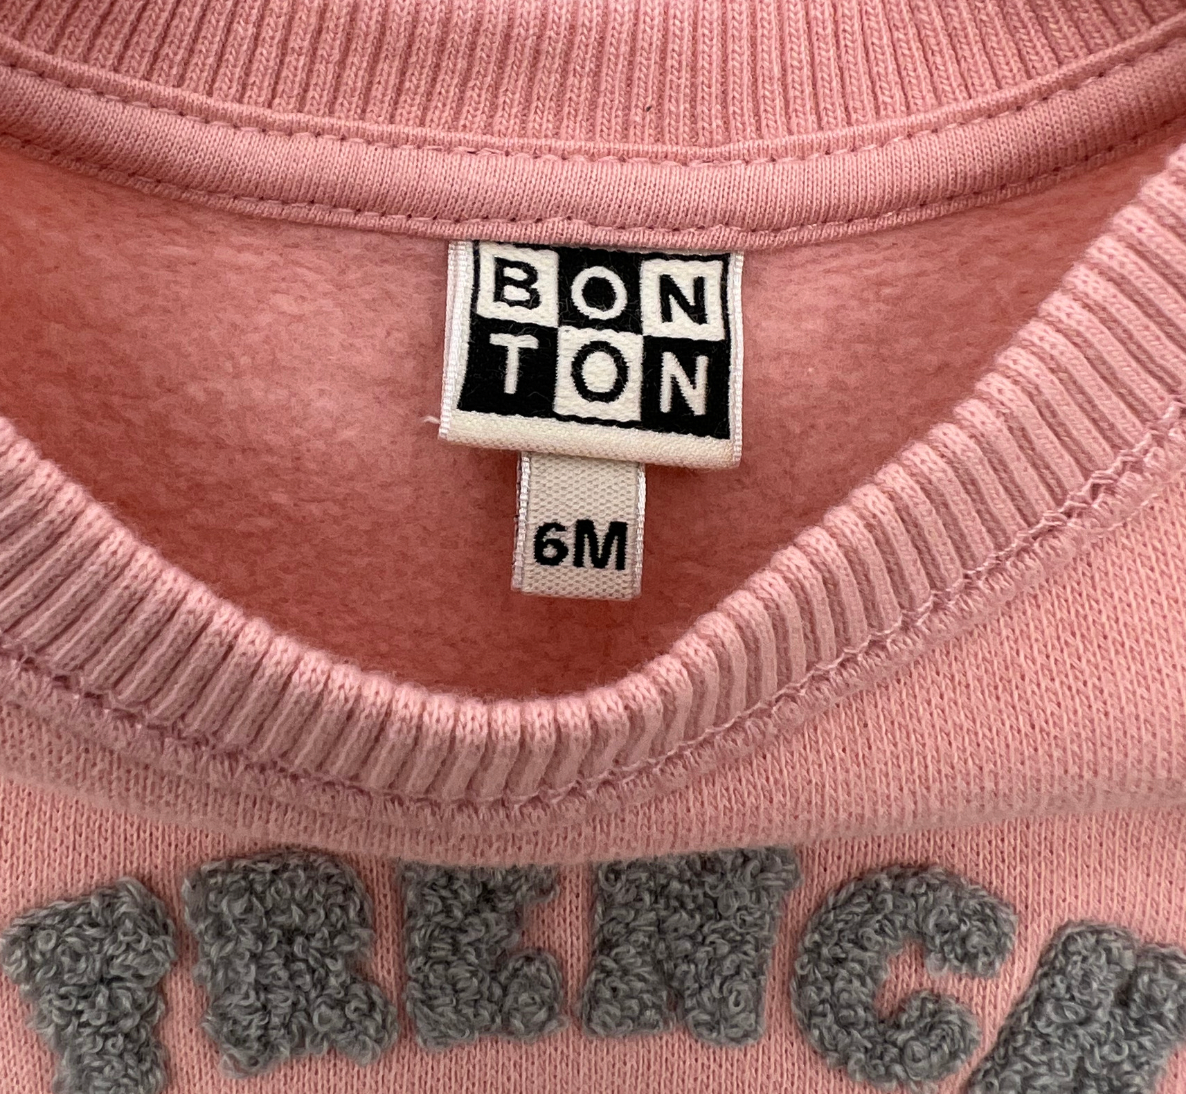 BONTON - "French Mademoiselle" sweatshirt - 6 months